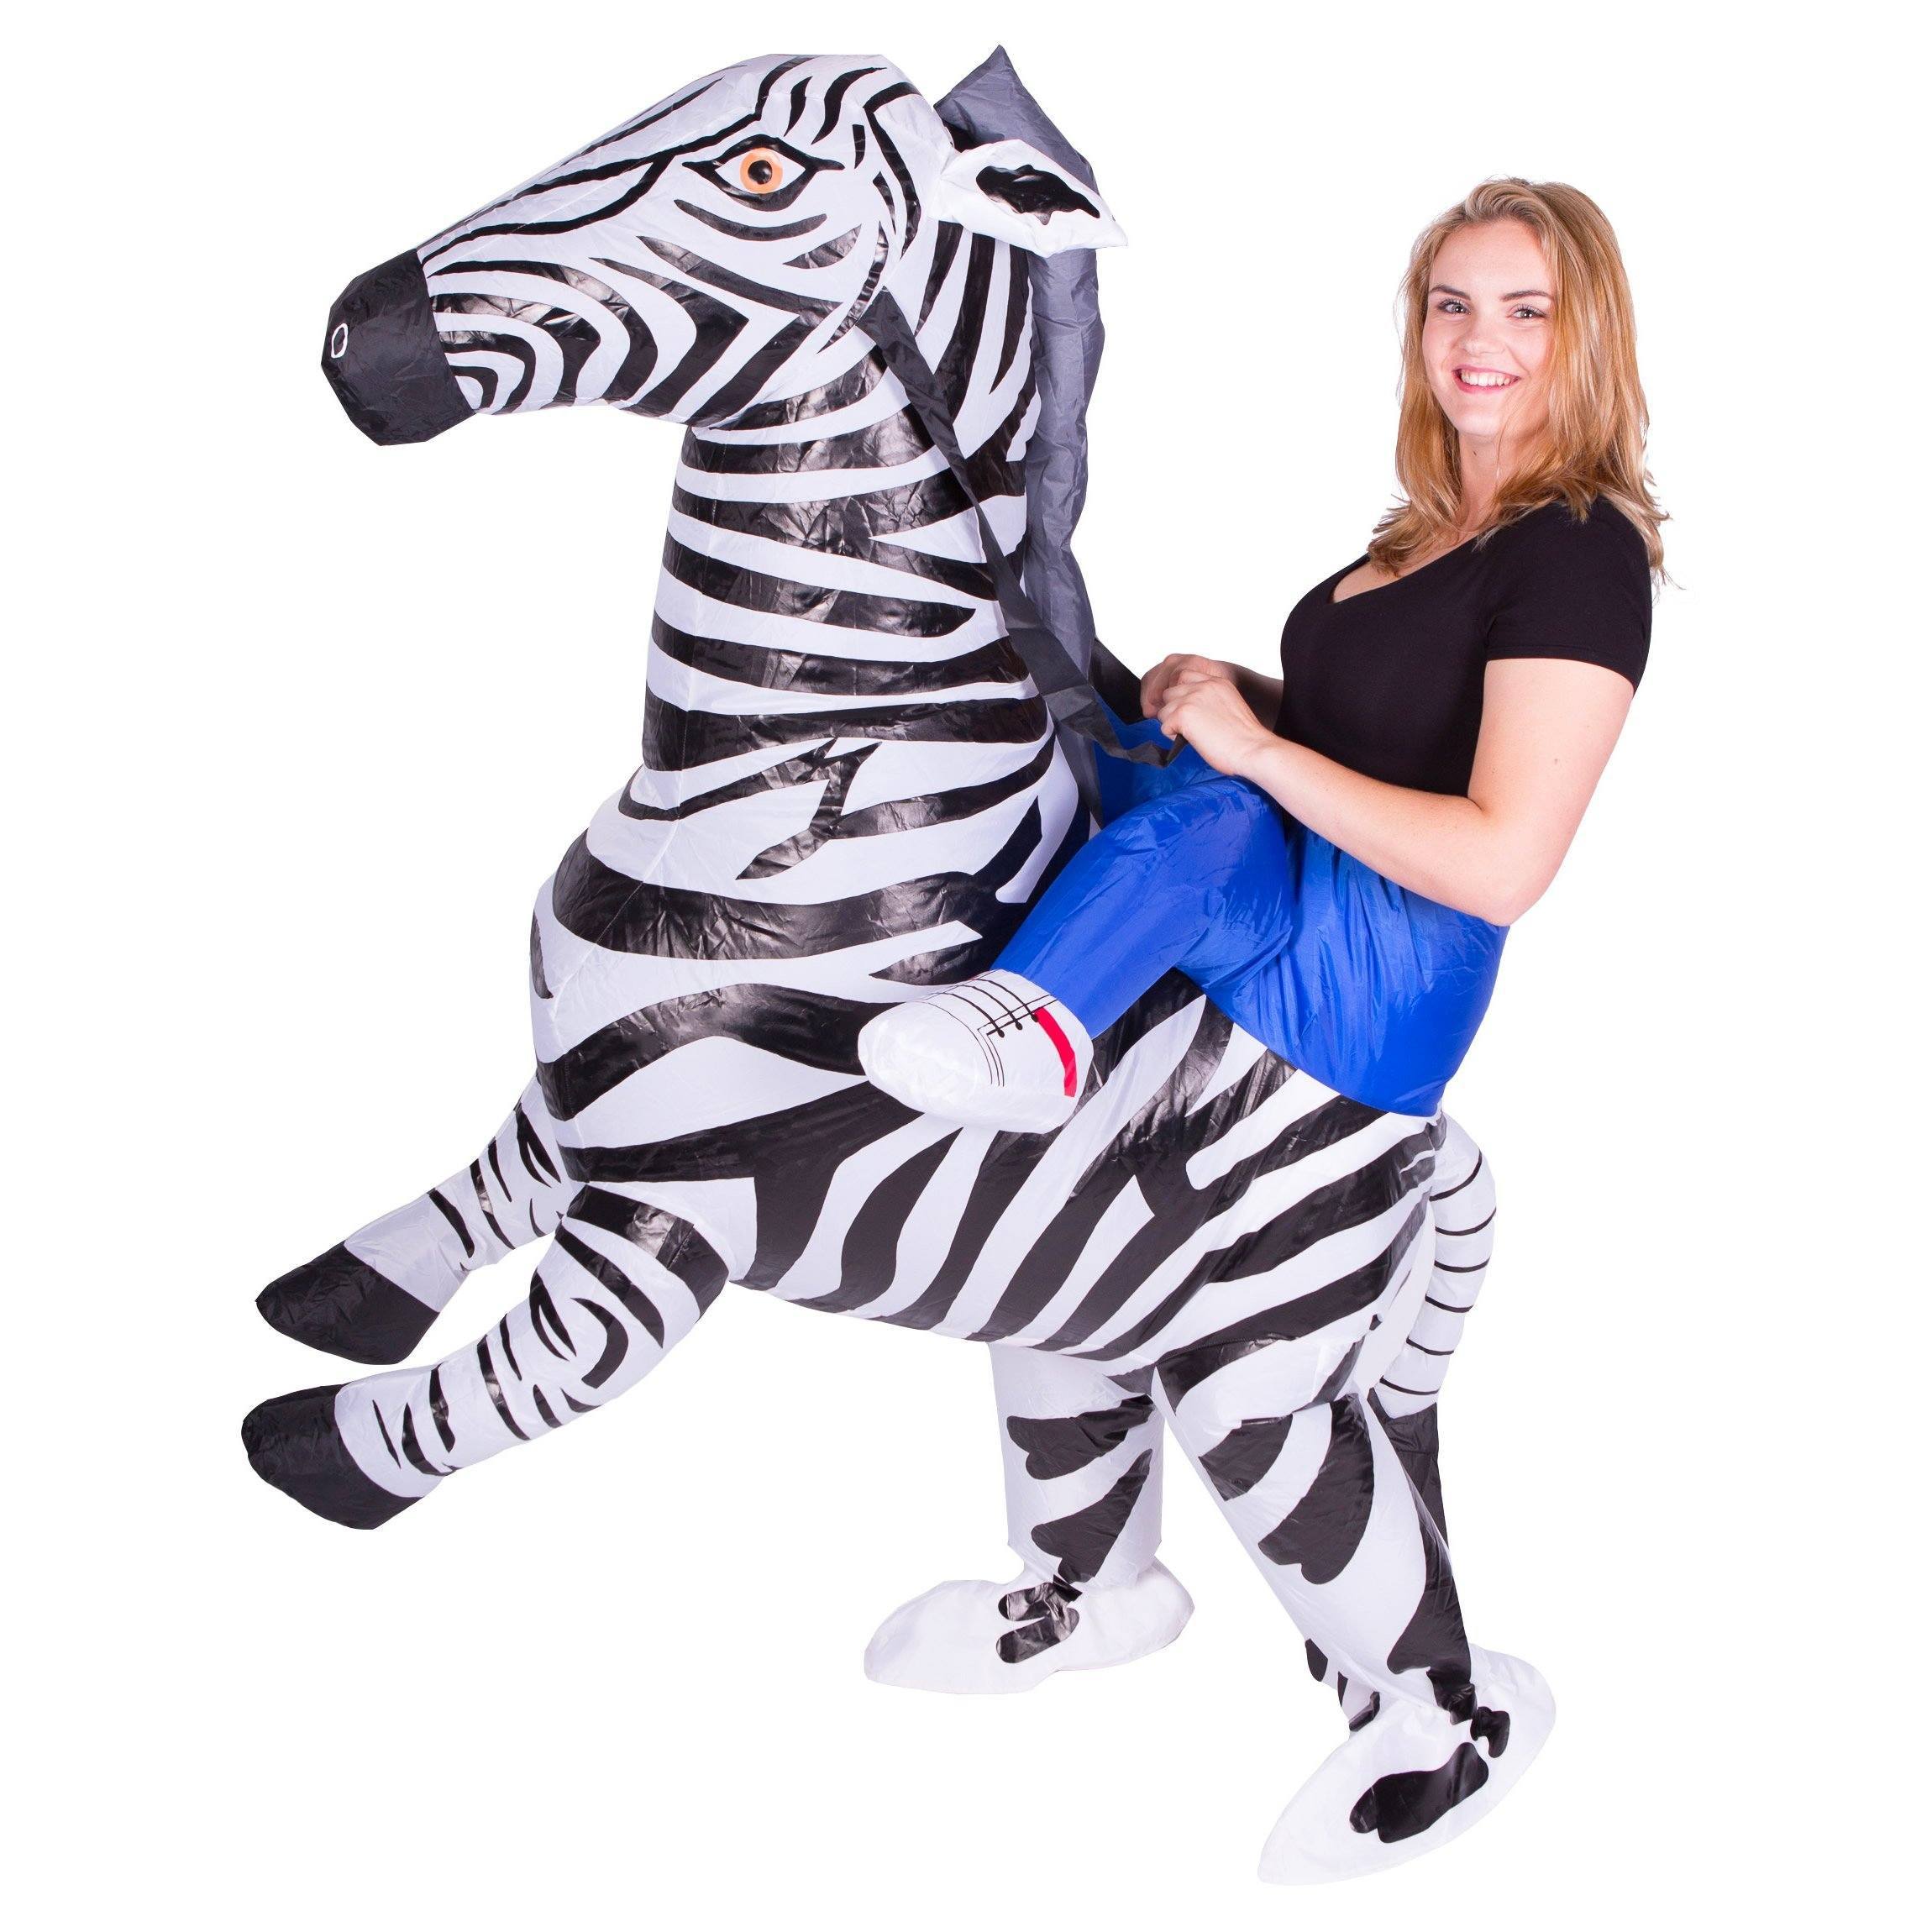 Fancy Dress - Inflatable Zebra Costume